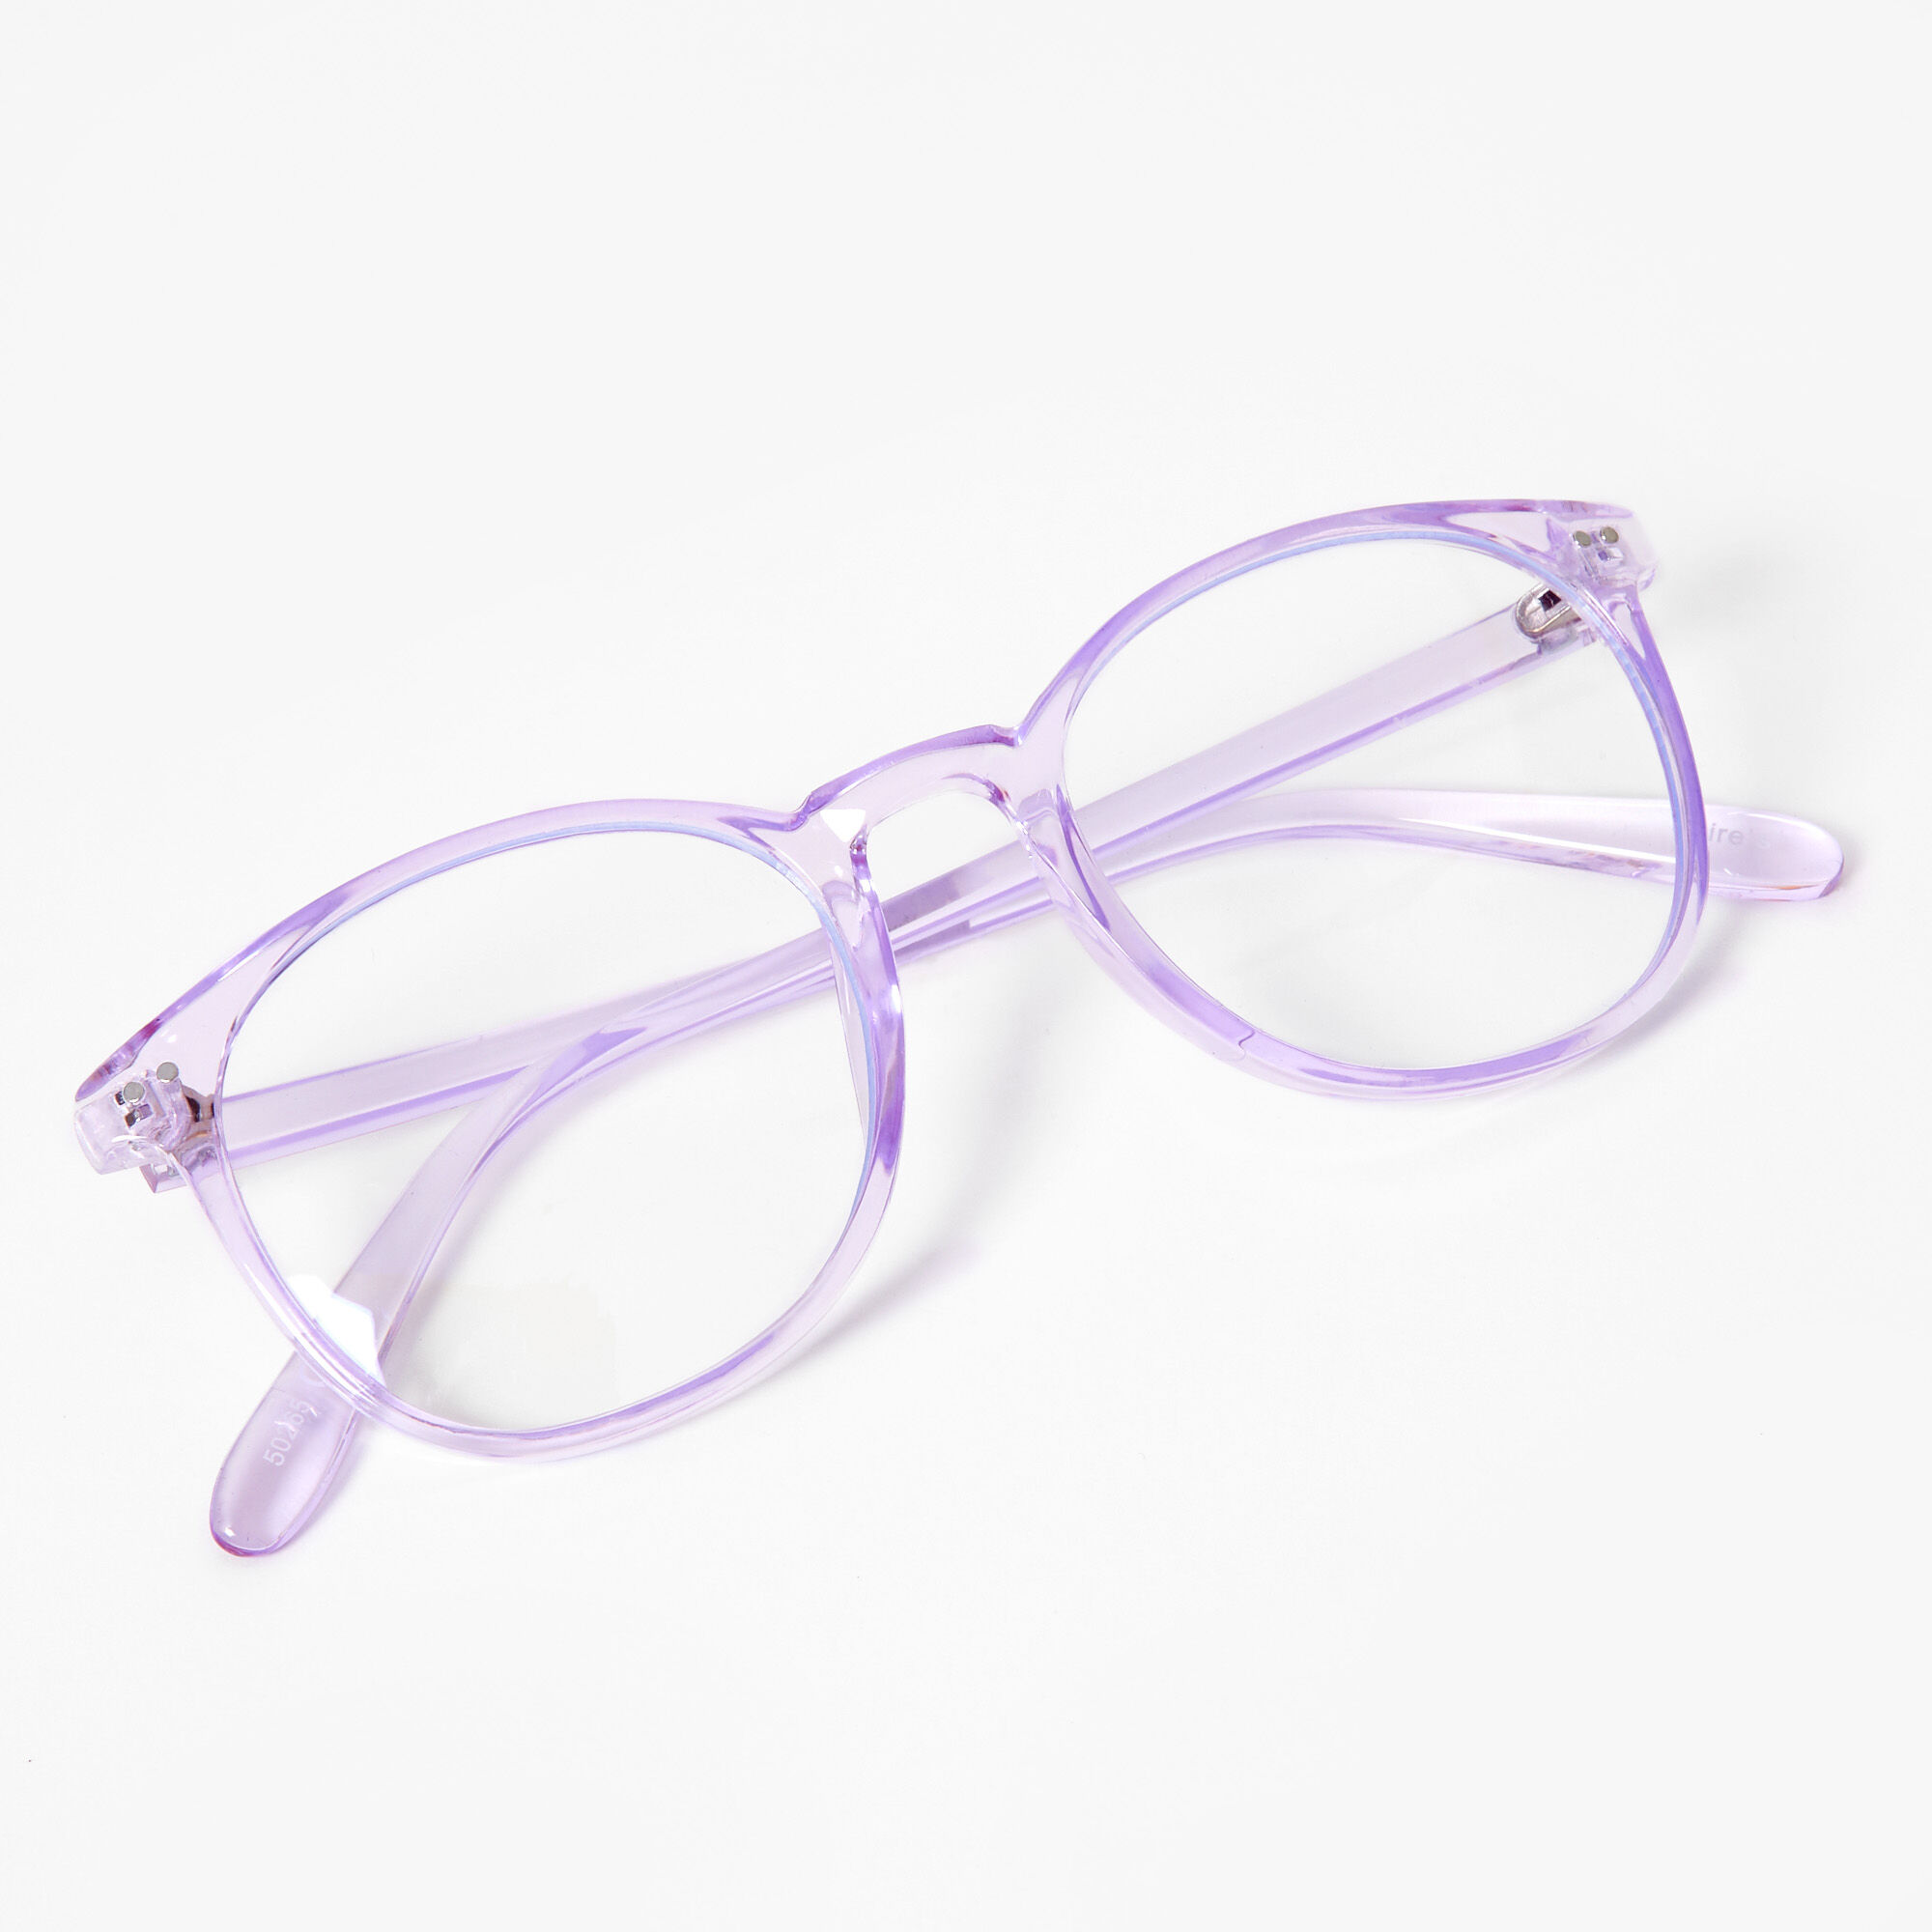 Accessories Glasses Glasses blue-lilac elegant 